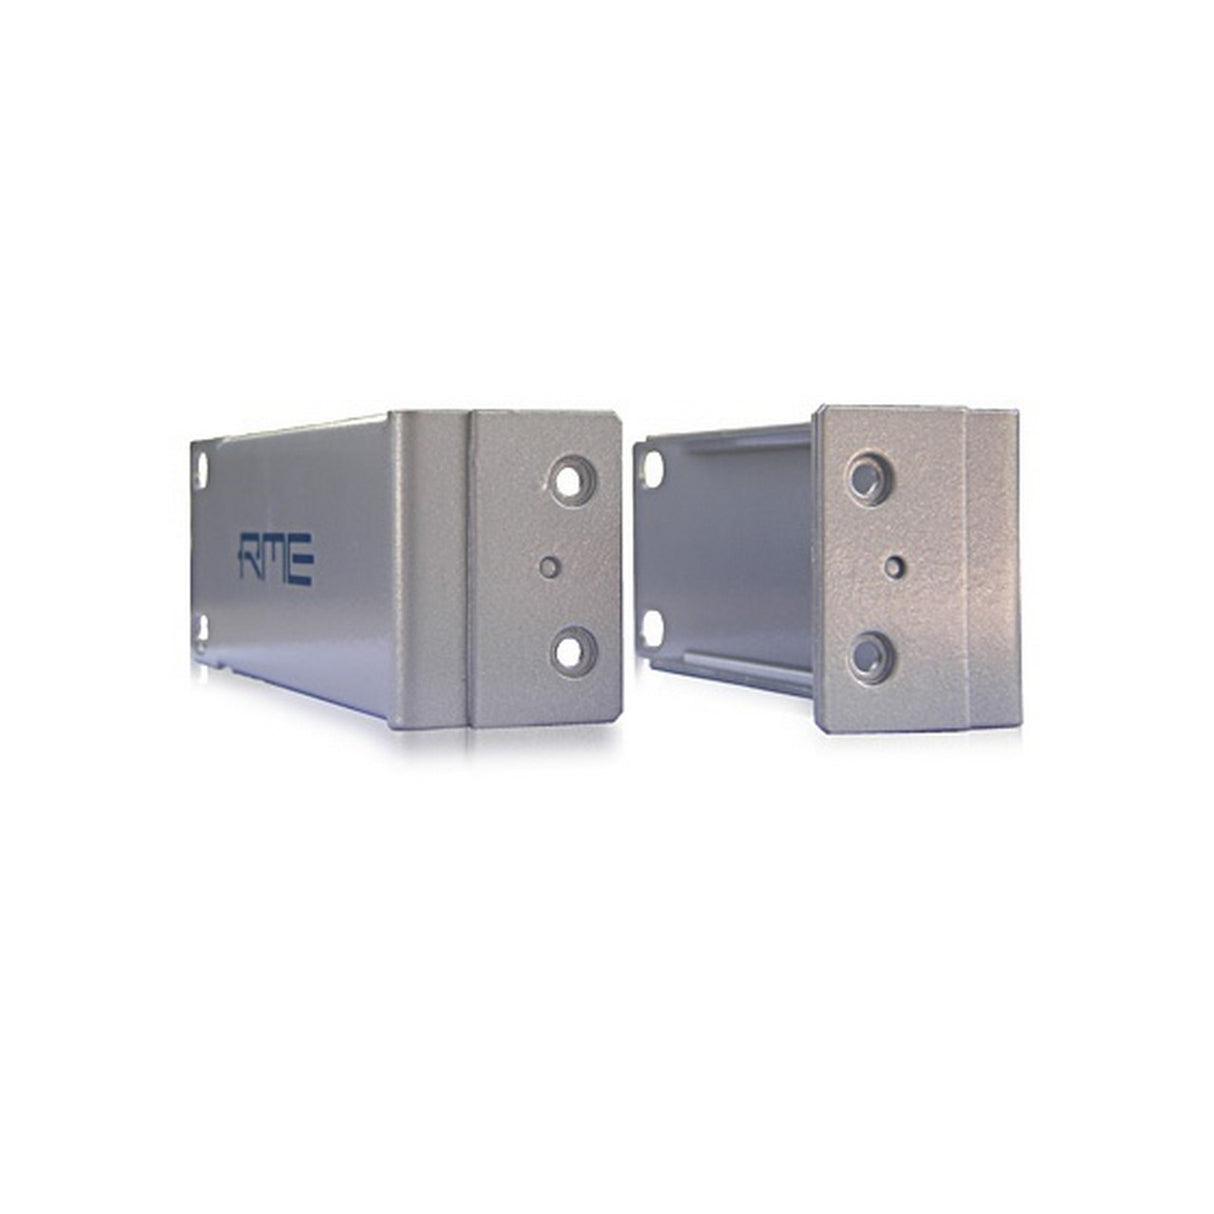 RME RM-19 | Rackmount Adaptor for Multiface II, ADI-2, FF-400